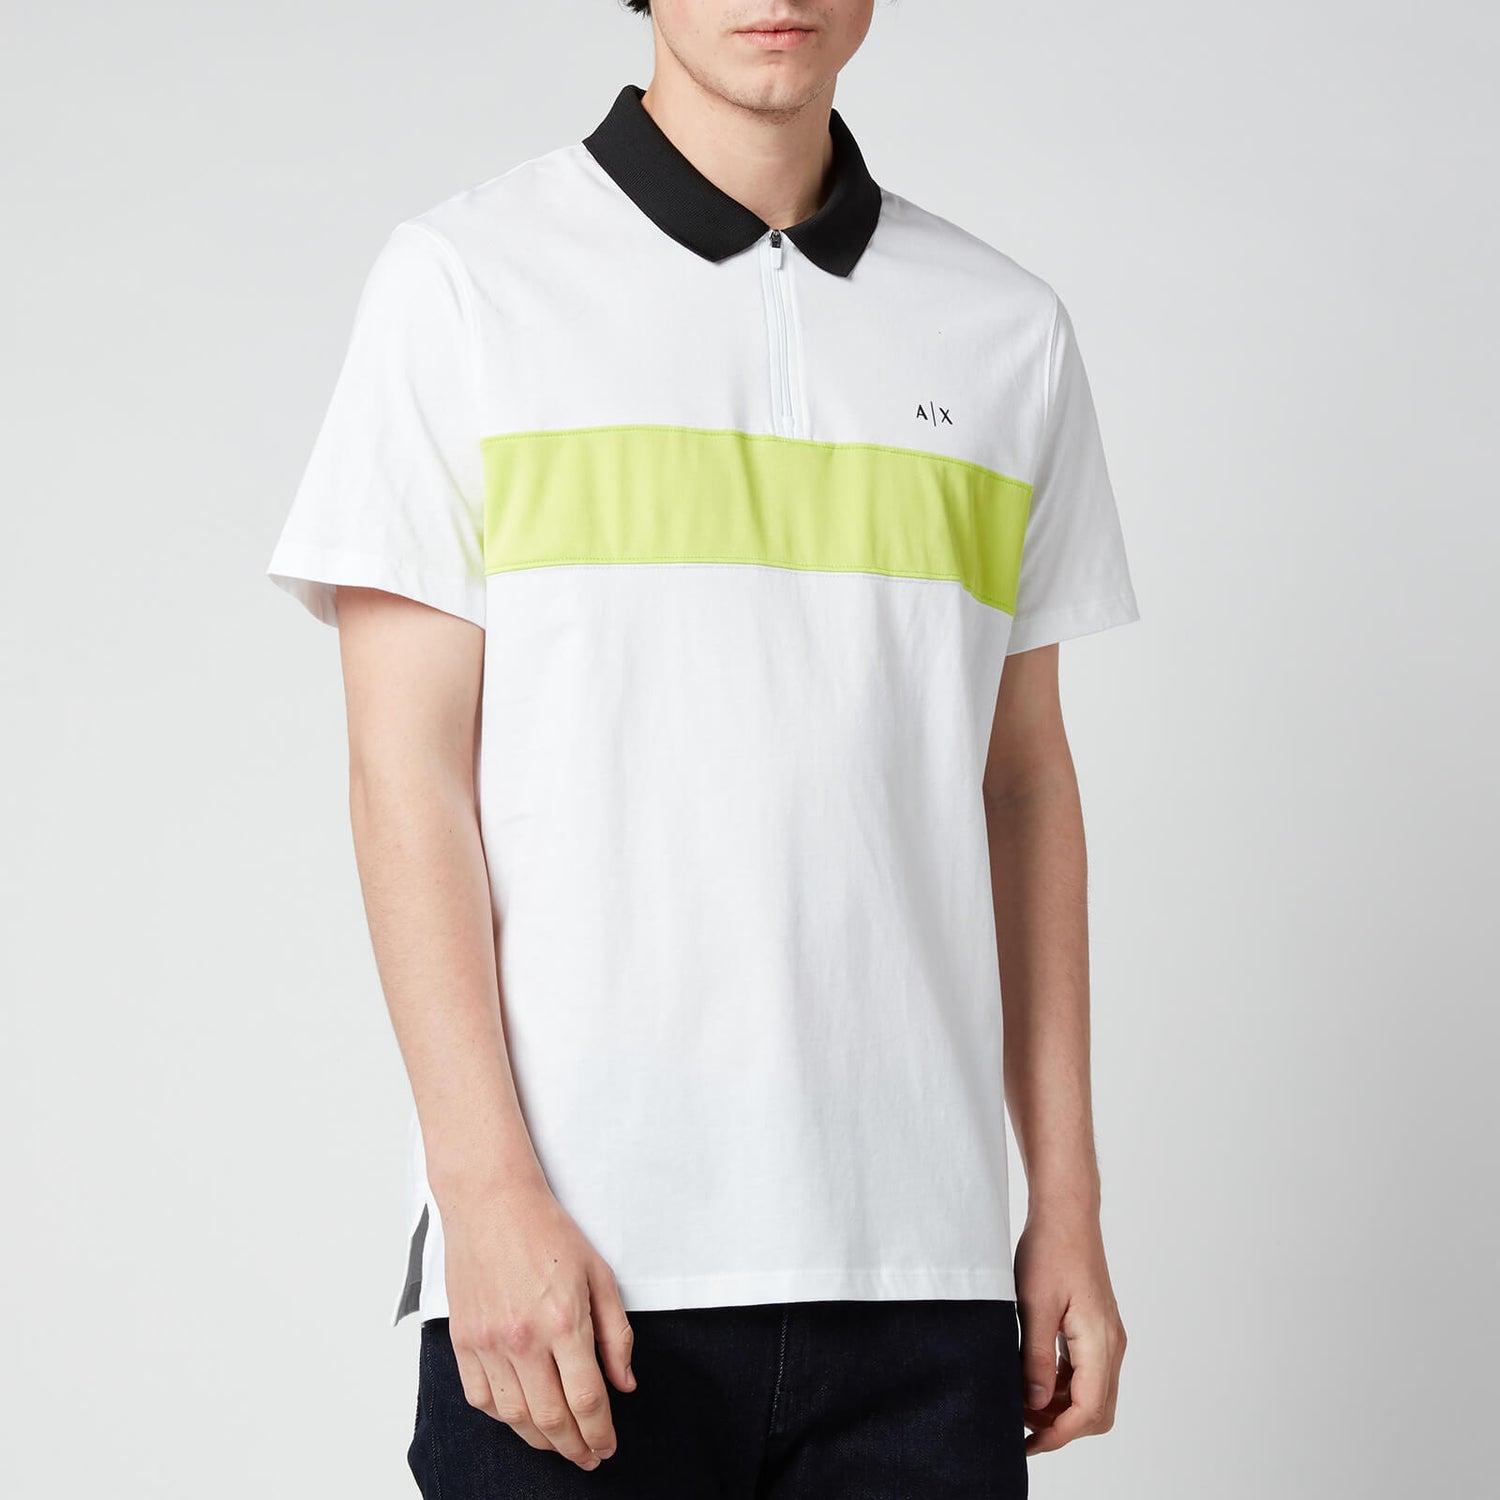 Armani Exchange Men's Neon Stripe Polo Shirt - White/Acid Lime